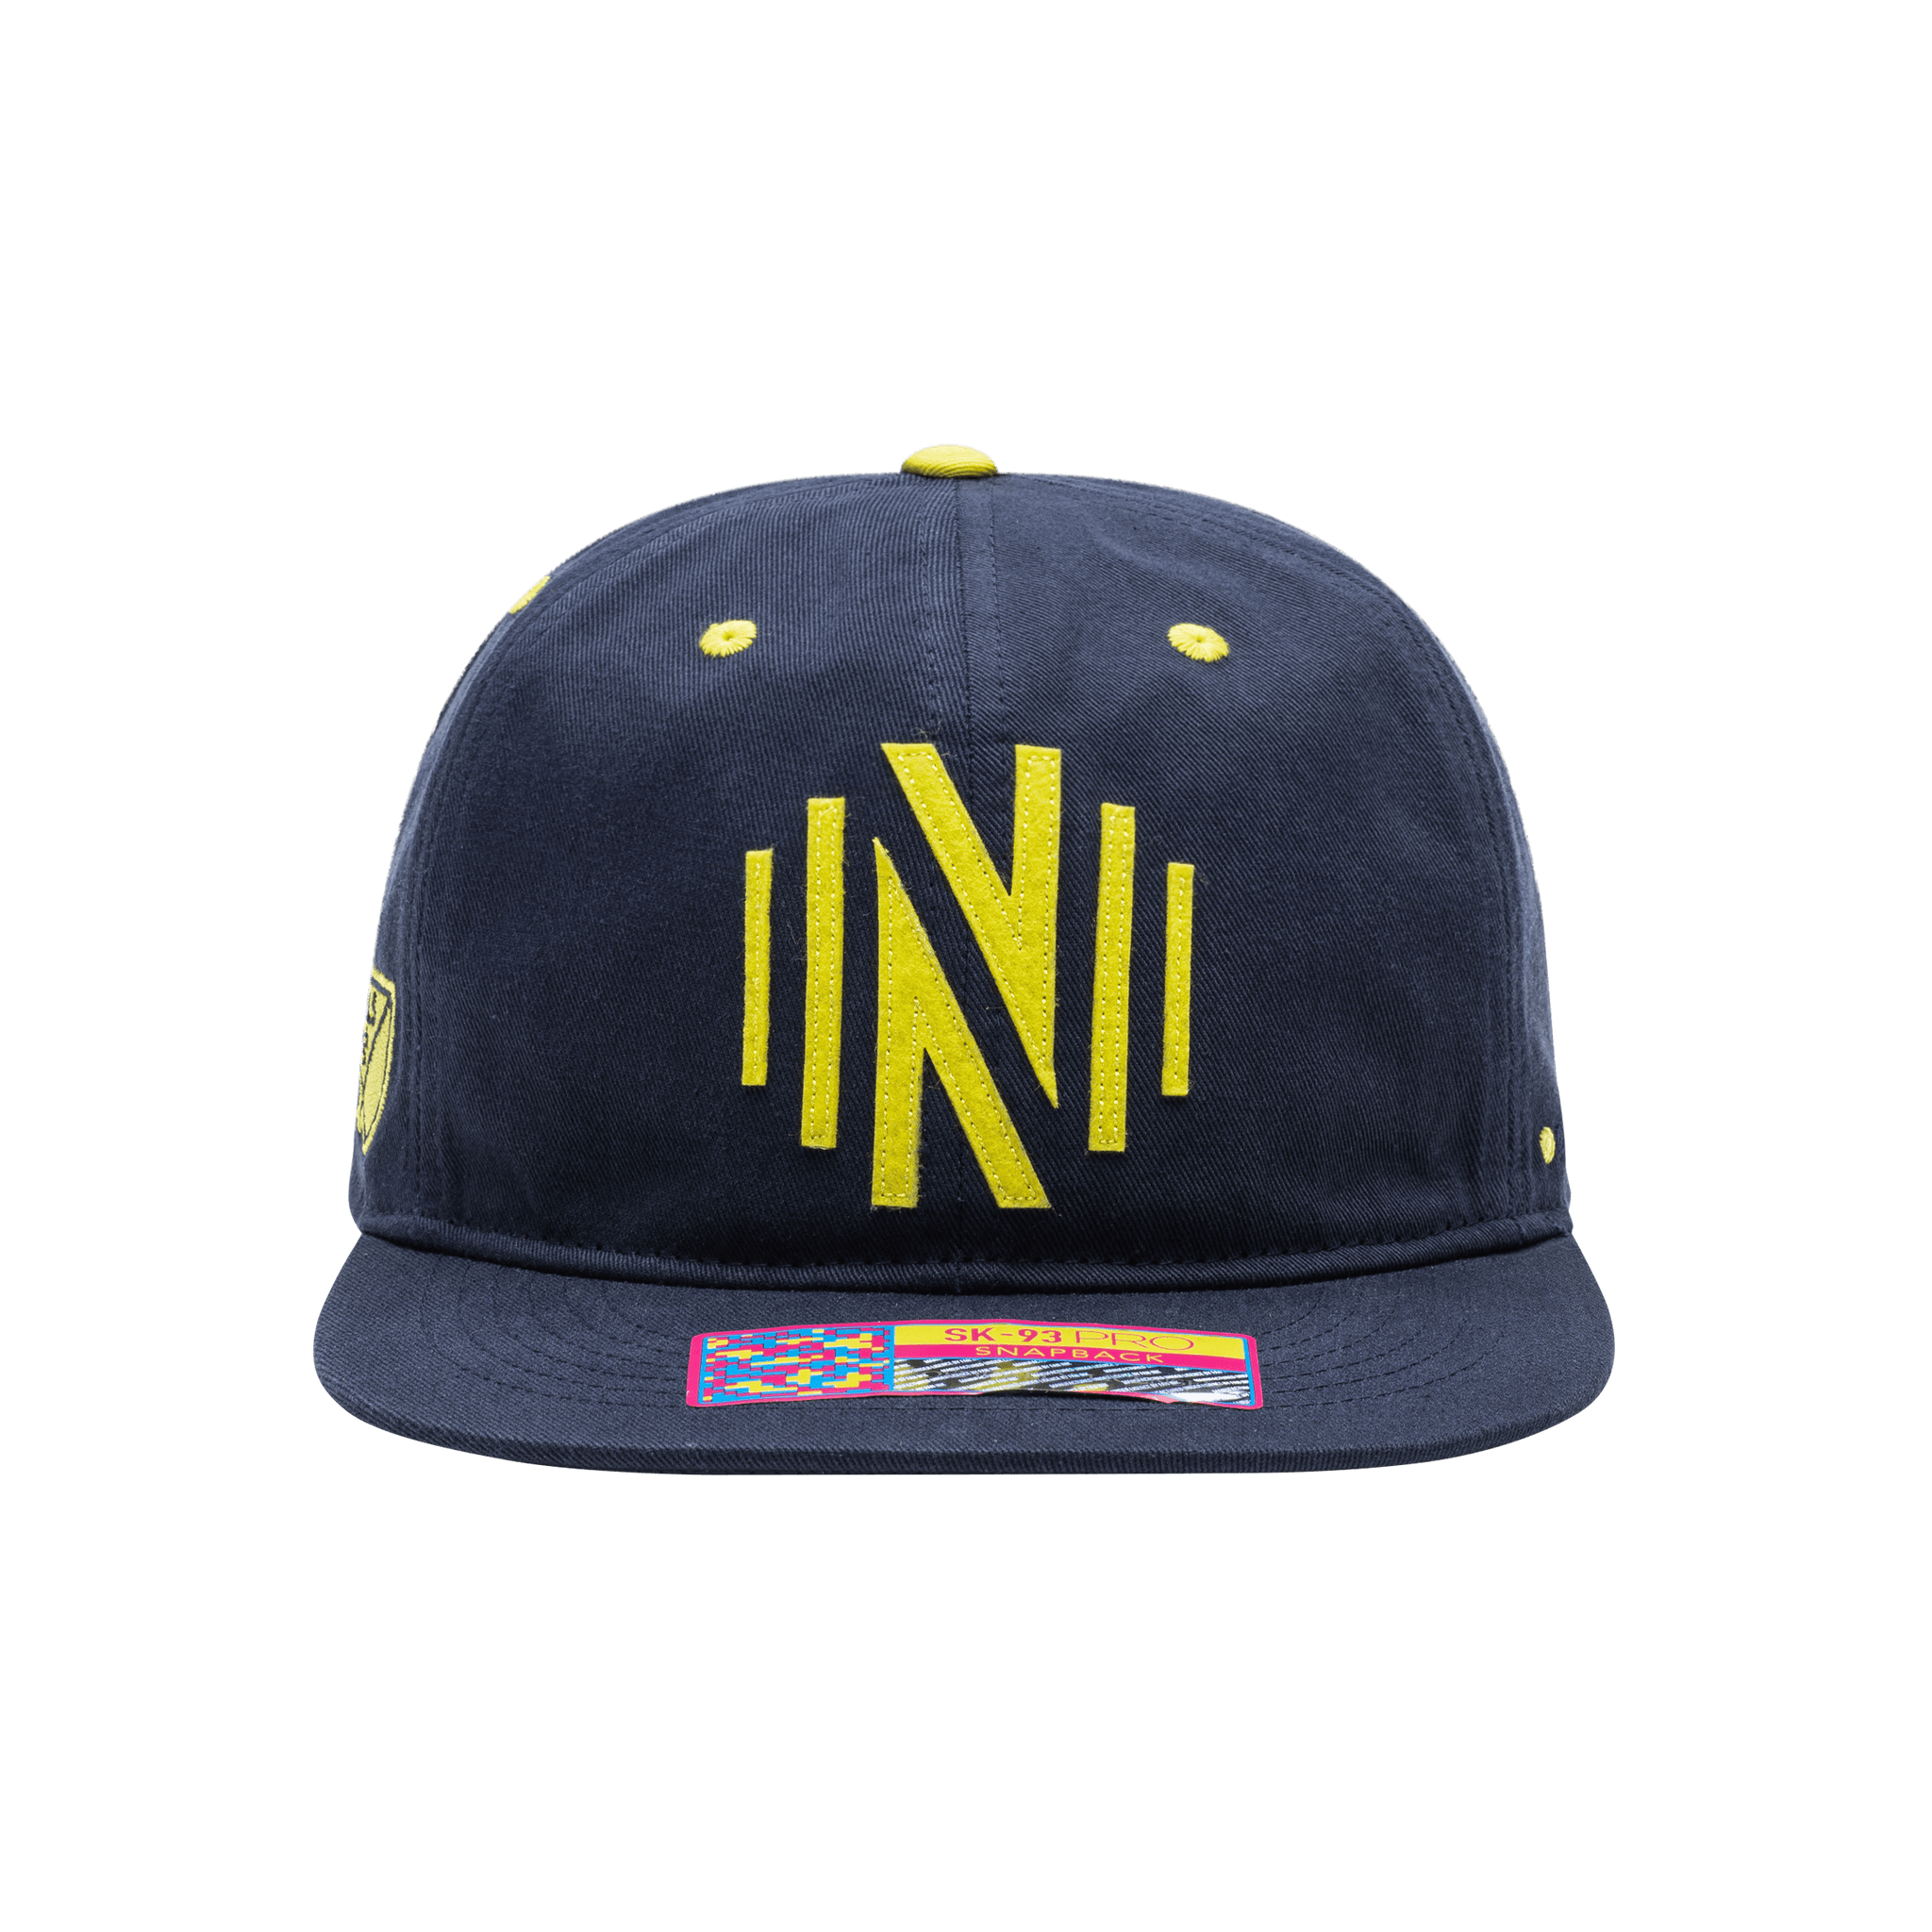 Nashville SC Bankroll Snapback Hat